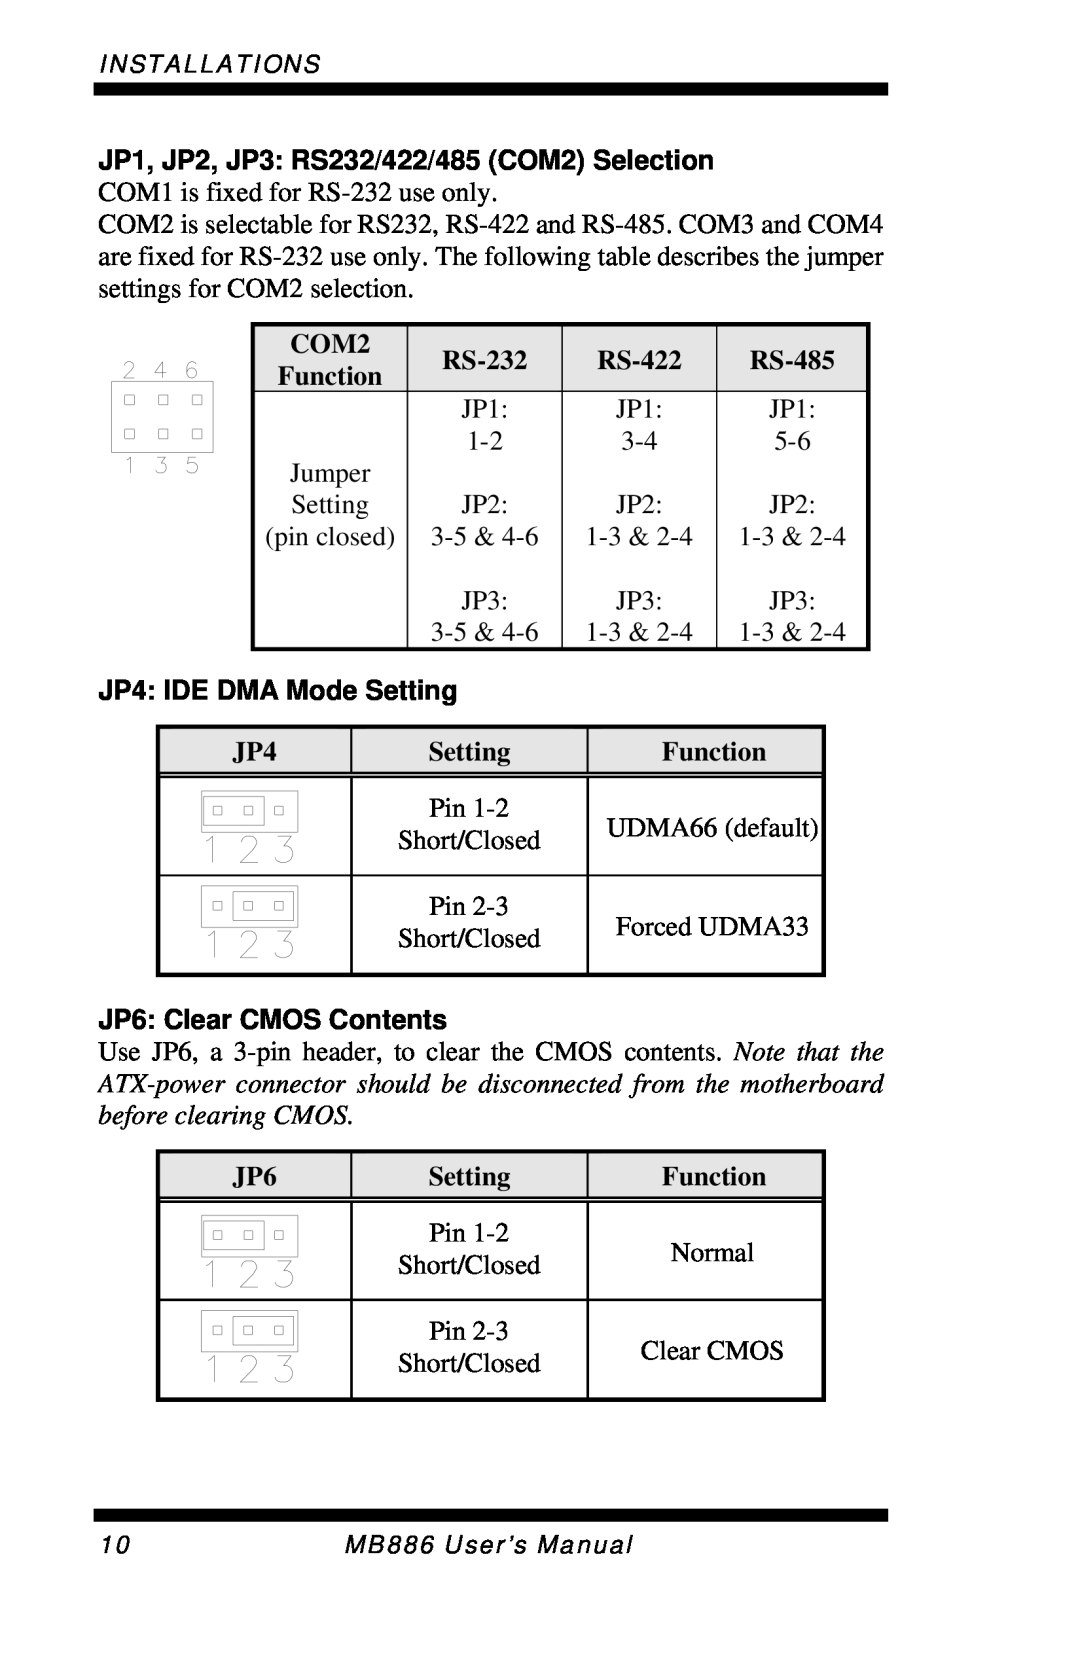 Intel MB886 user manual JP4 IDE DMA Mode Setting, JP6 Clear CMOS Contents 